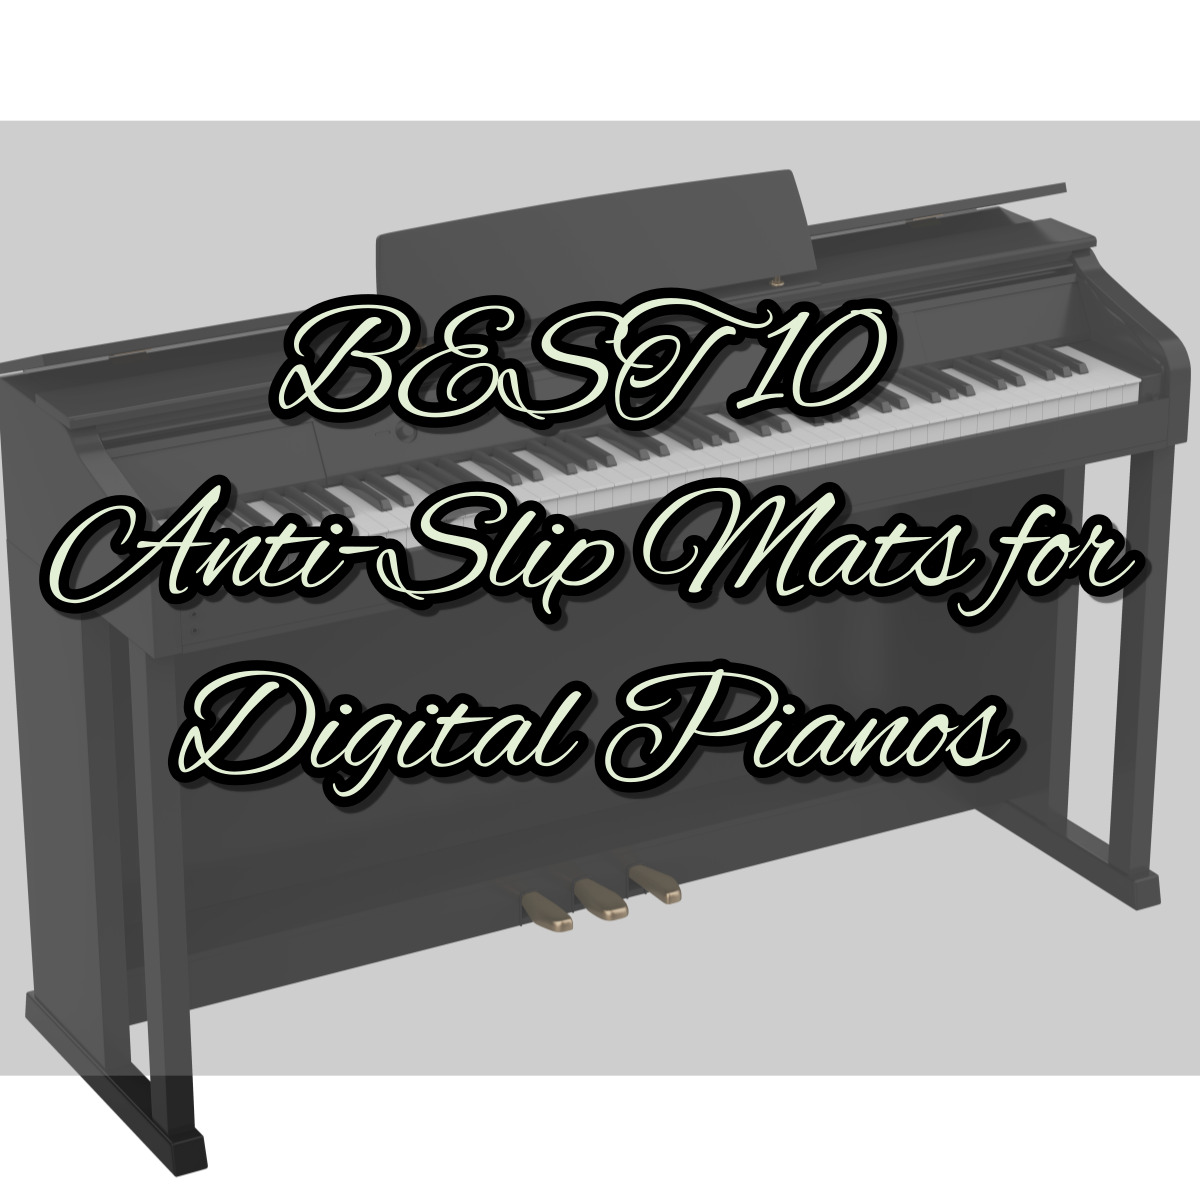 BEST 10 Anti-Slip Mats for Digital Pianos